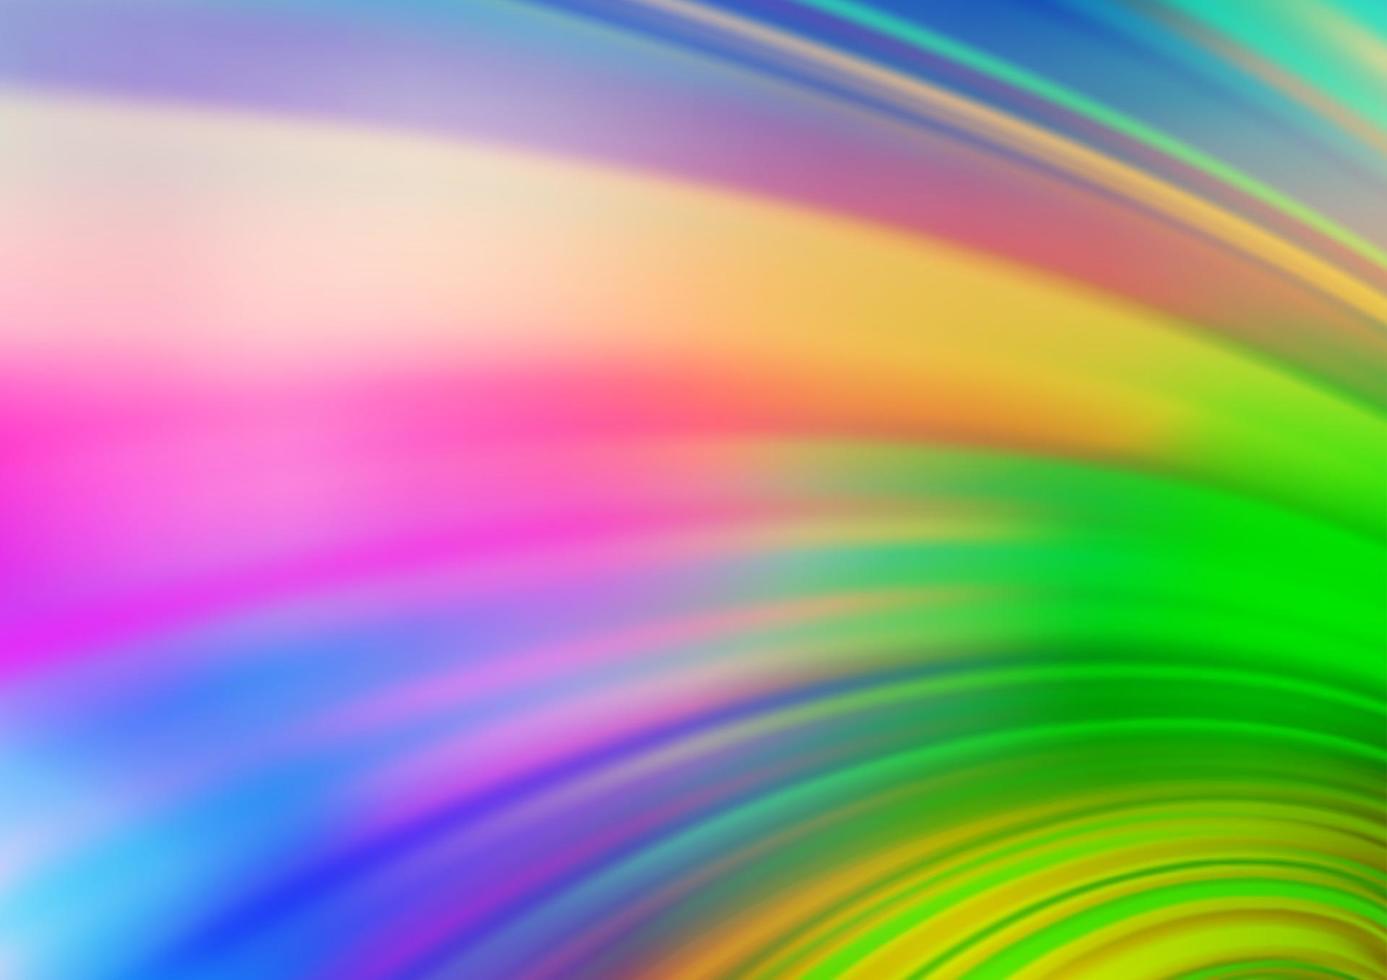 luz multicolor, padrão de bokeh abstrato de vetor de arco-íris.